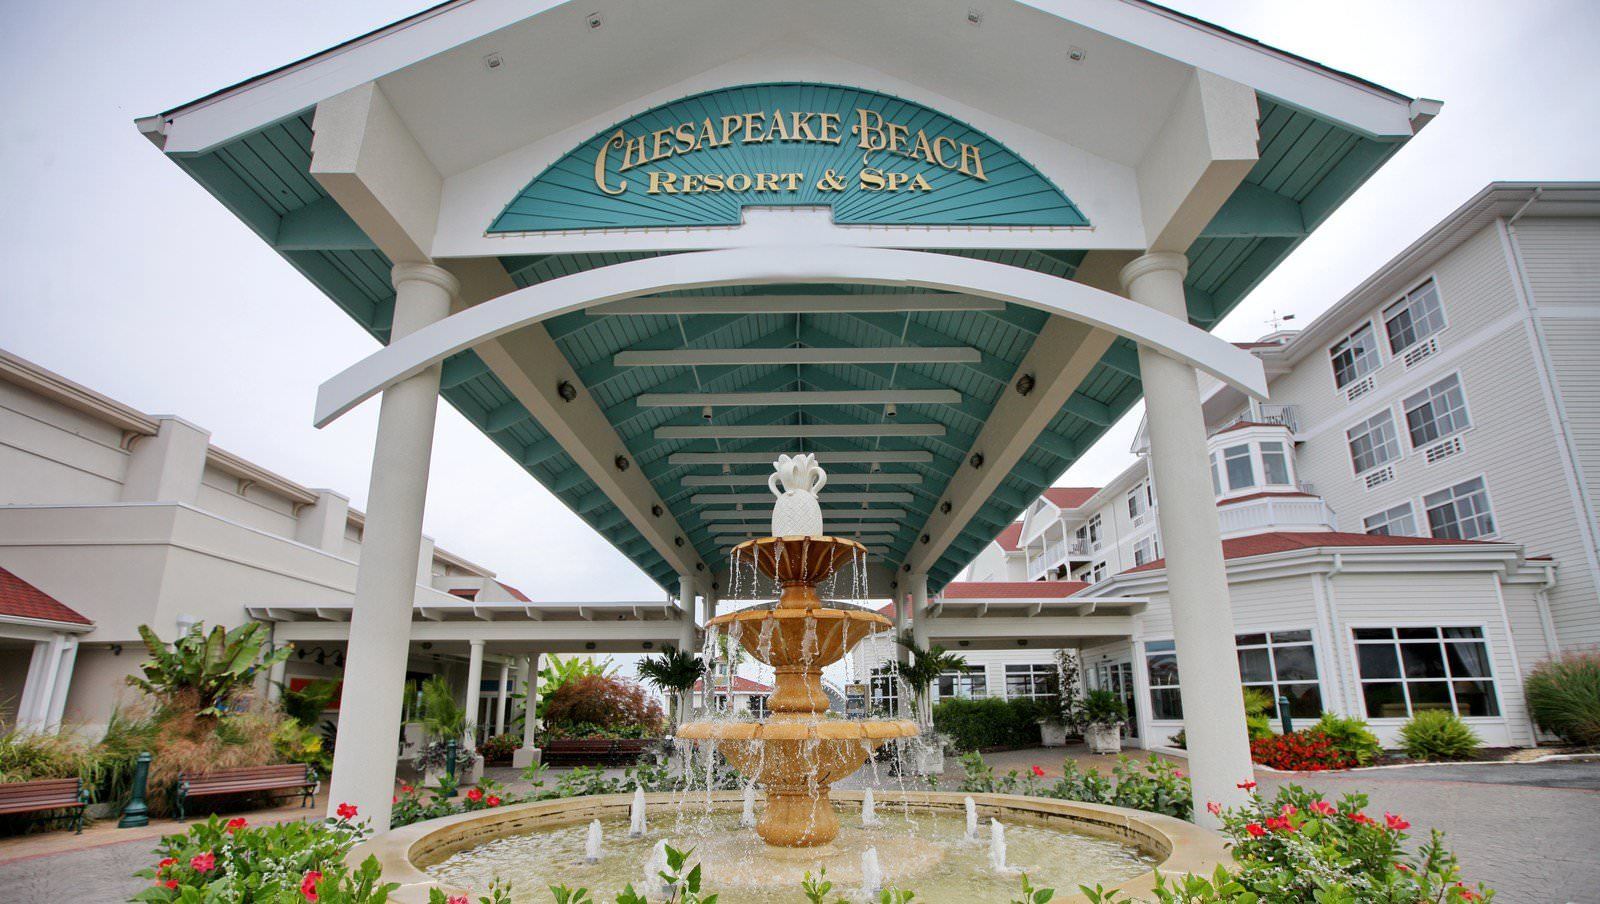 Ultimate List of Best Luxury Hotels in Chesapeake, Maryland, Chesapeake Beach Resort & Spa